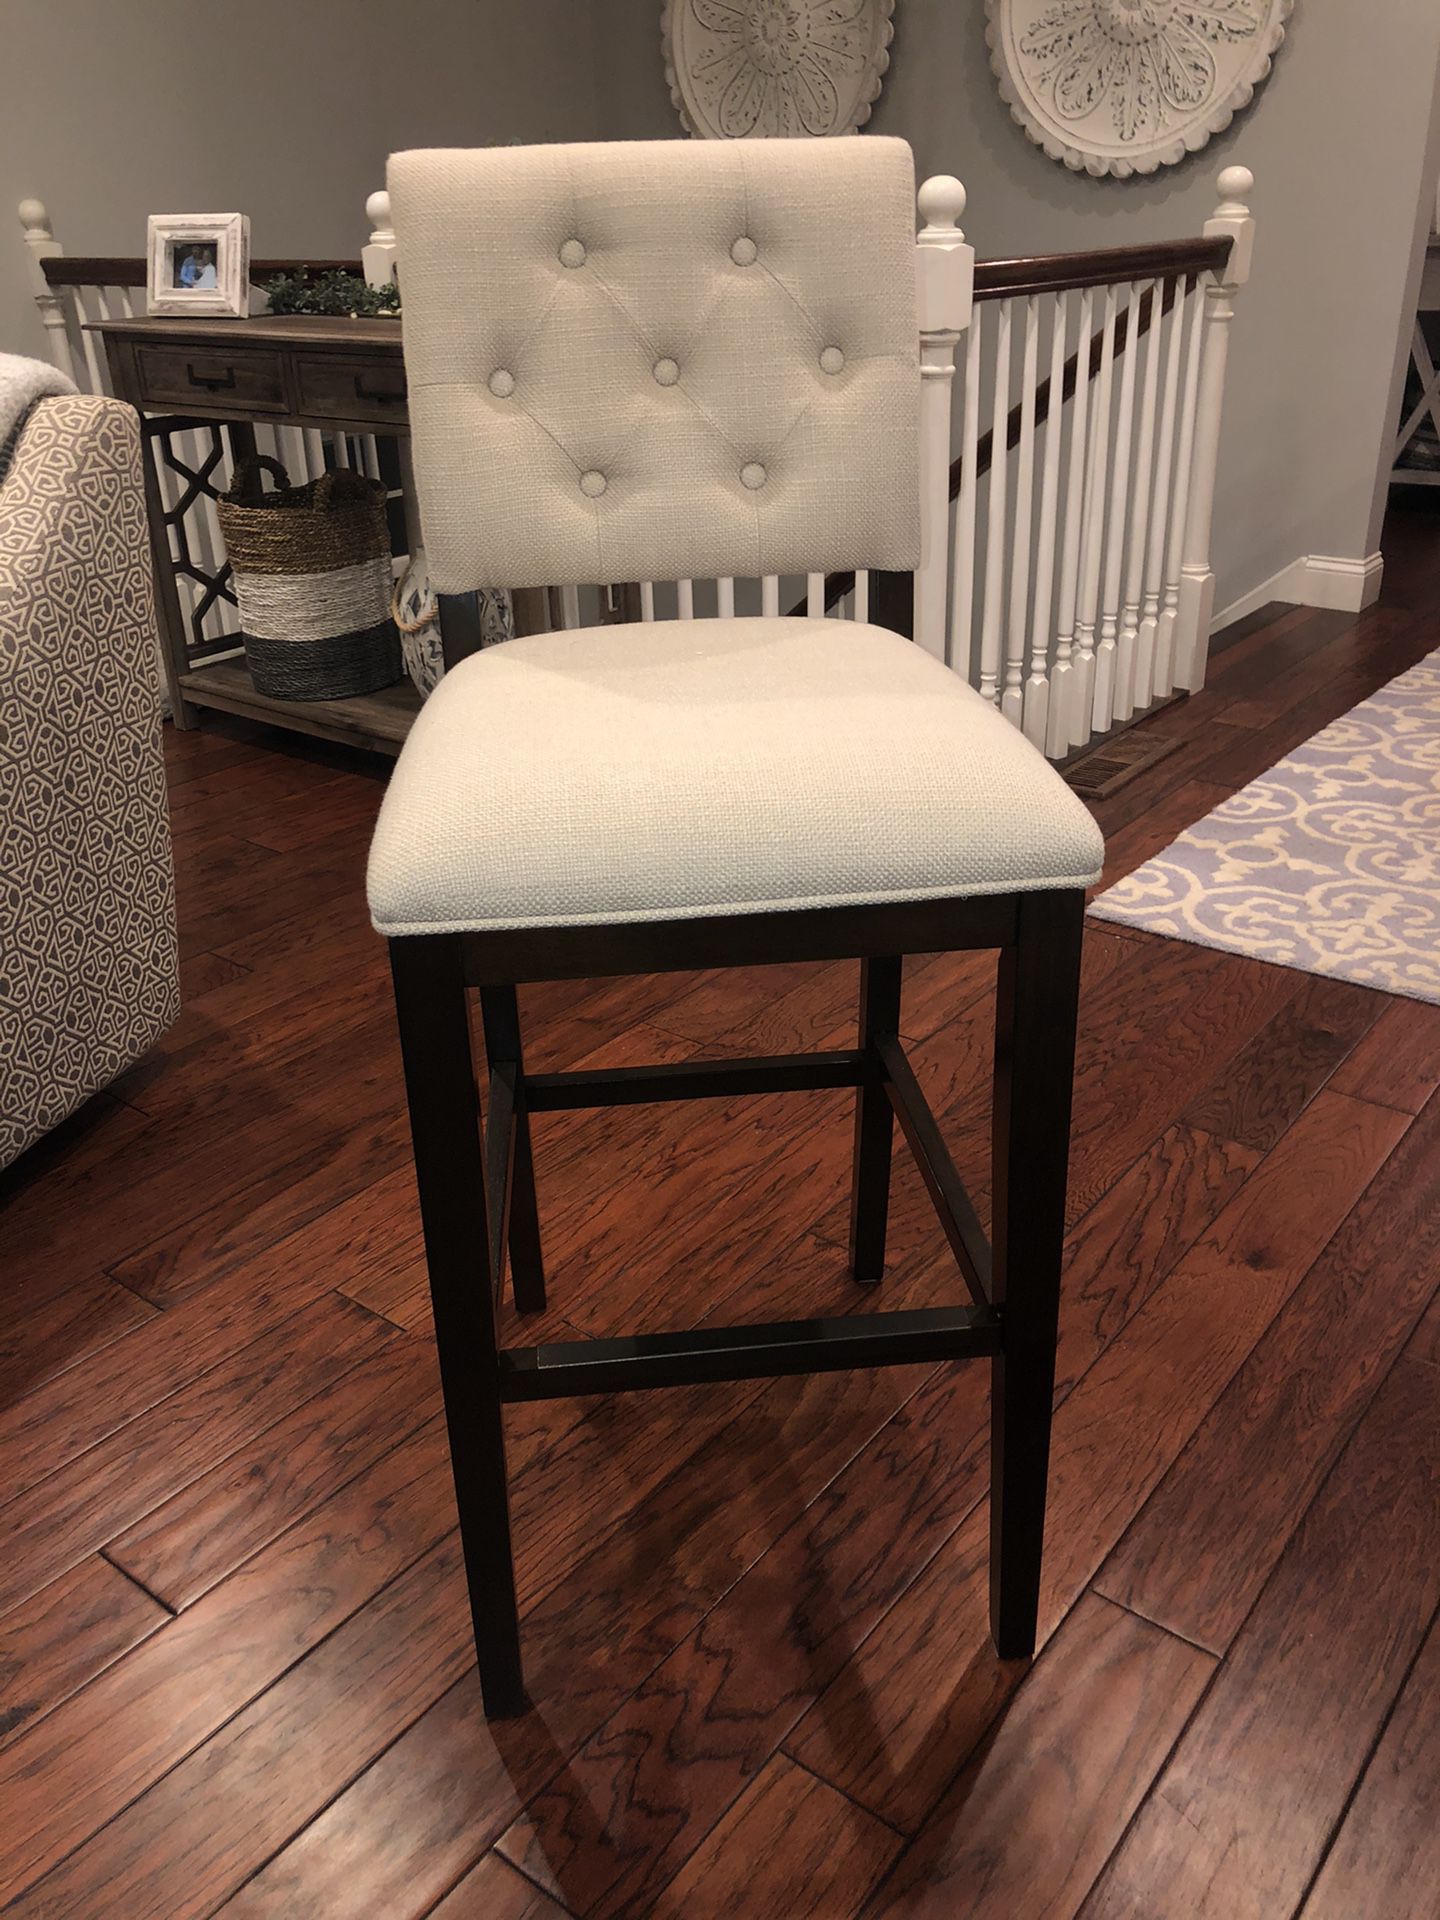 Brand new 30" bar stools